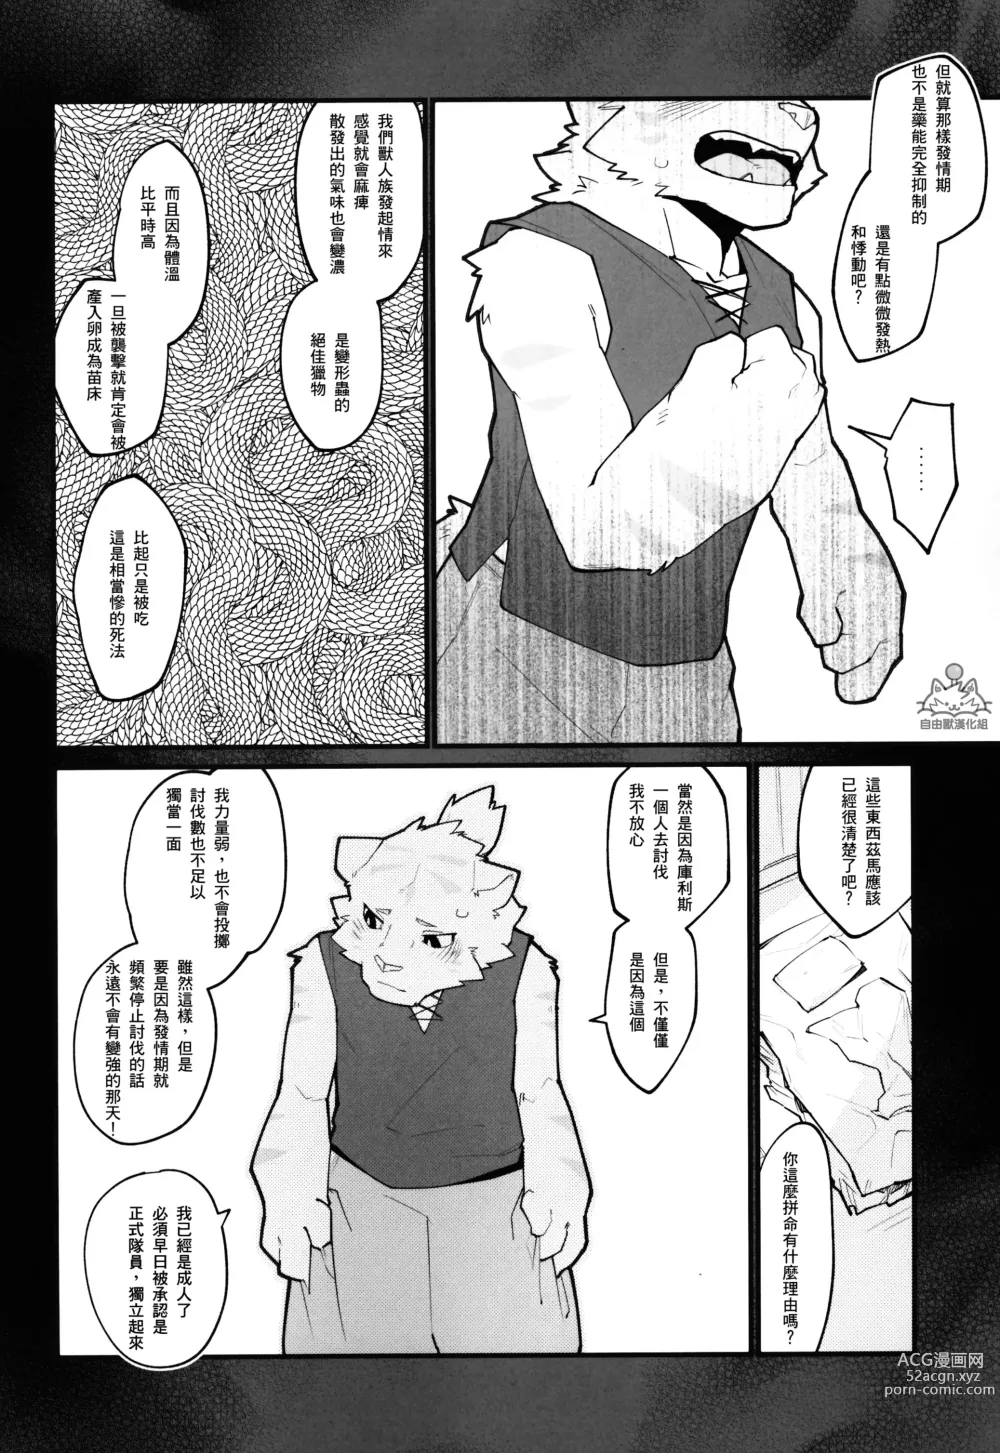 Page 7 of doujinshi BUTTERFLY EFFECT ZERO